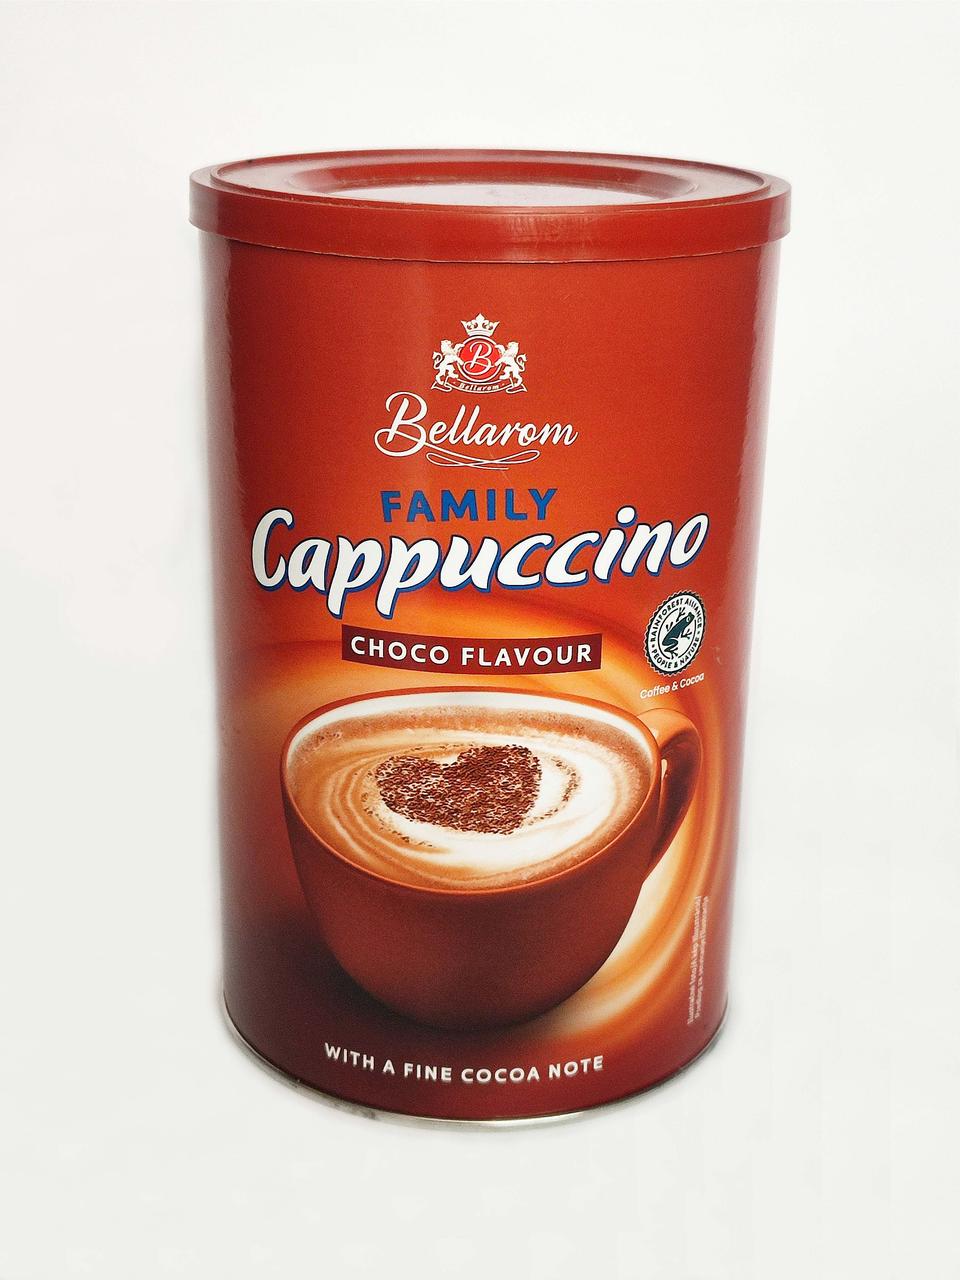 Cappuccino vanille - Bellarom - 200 g